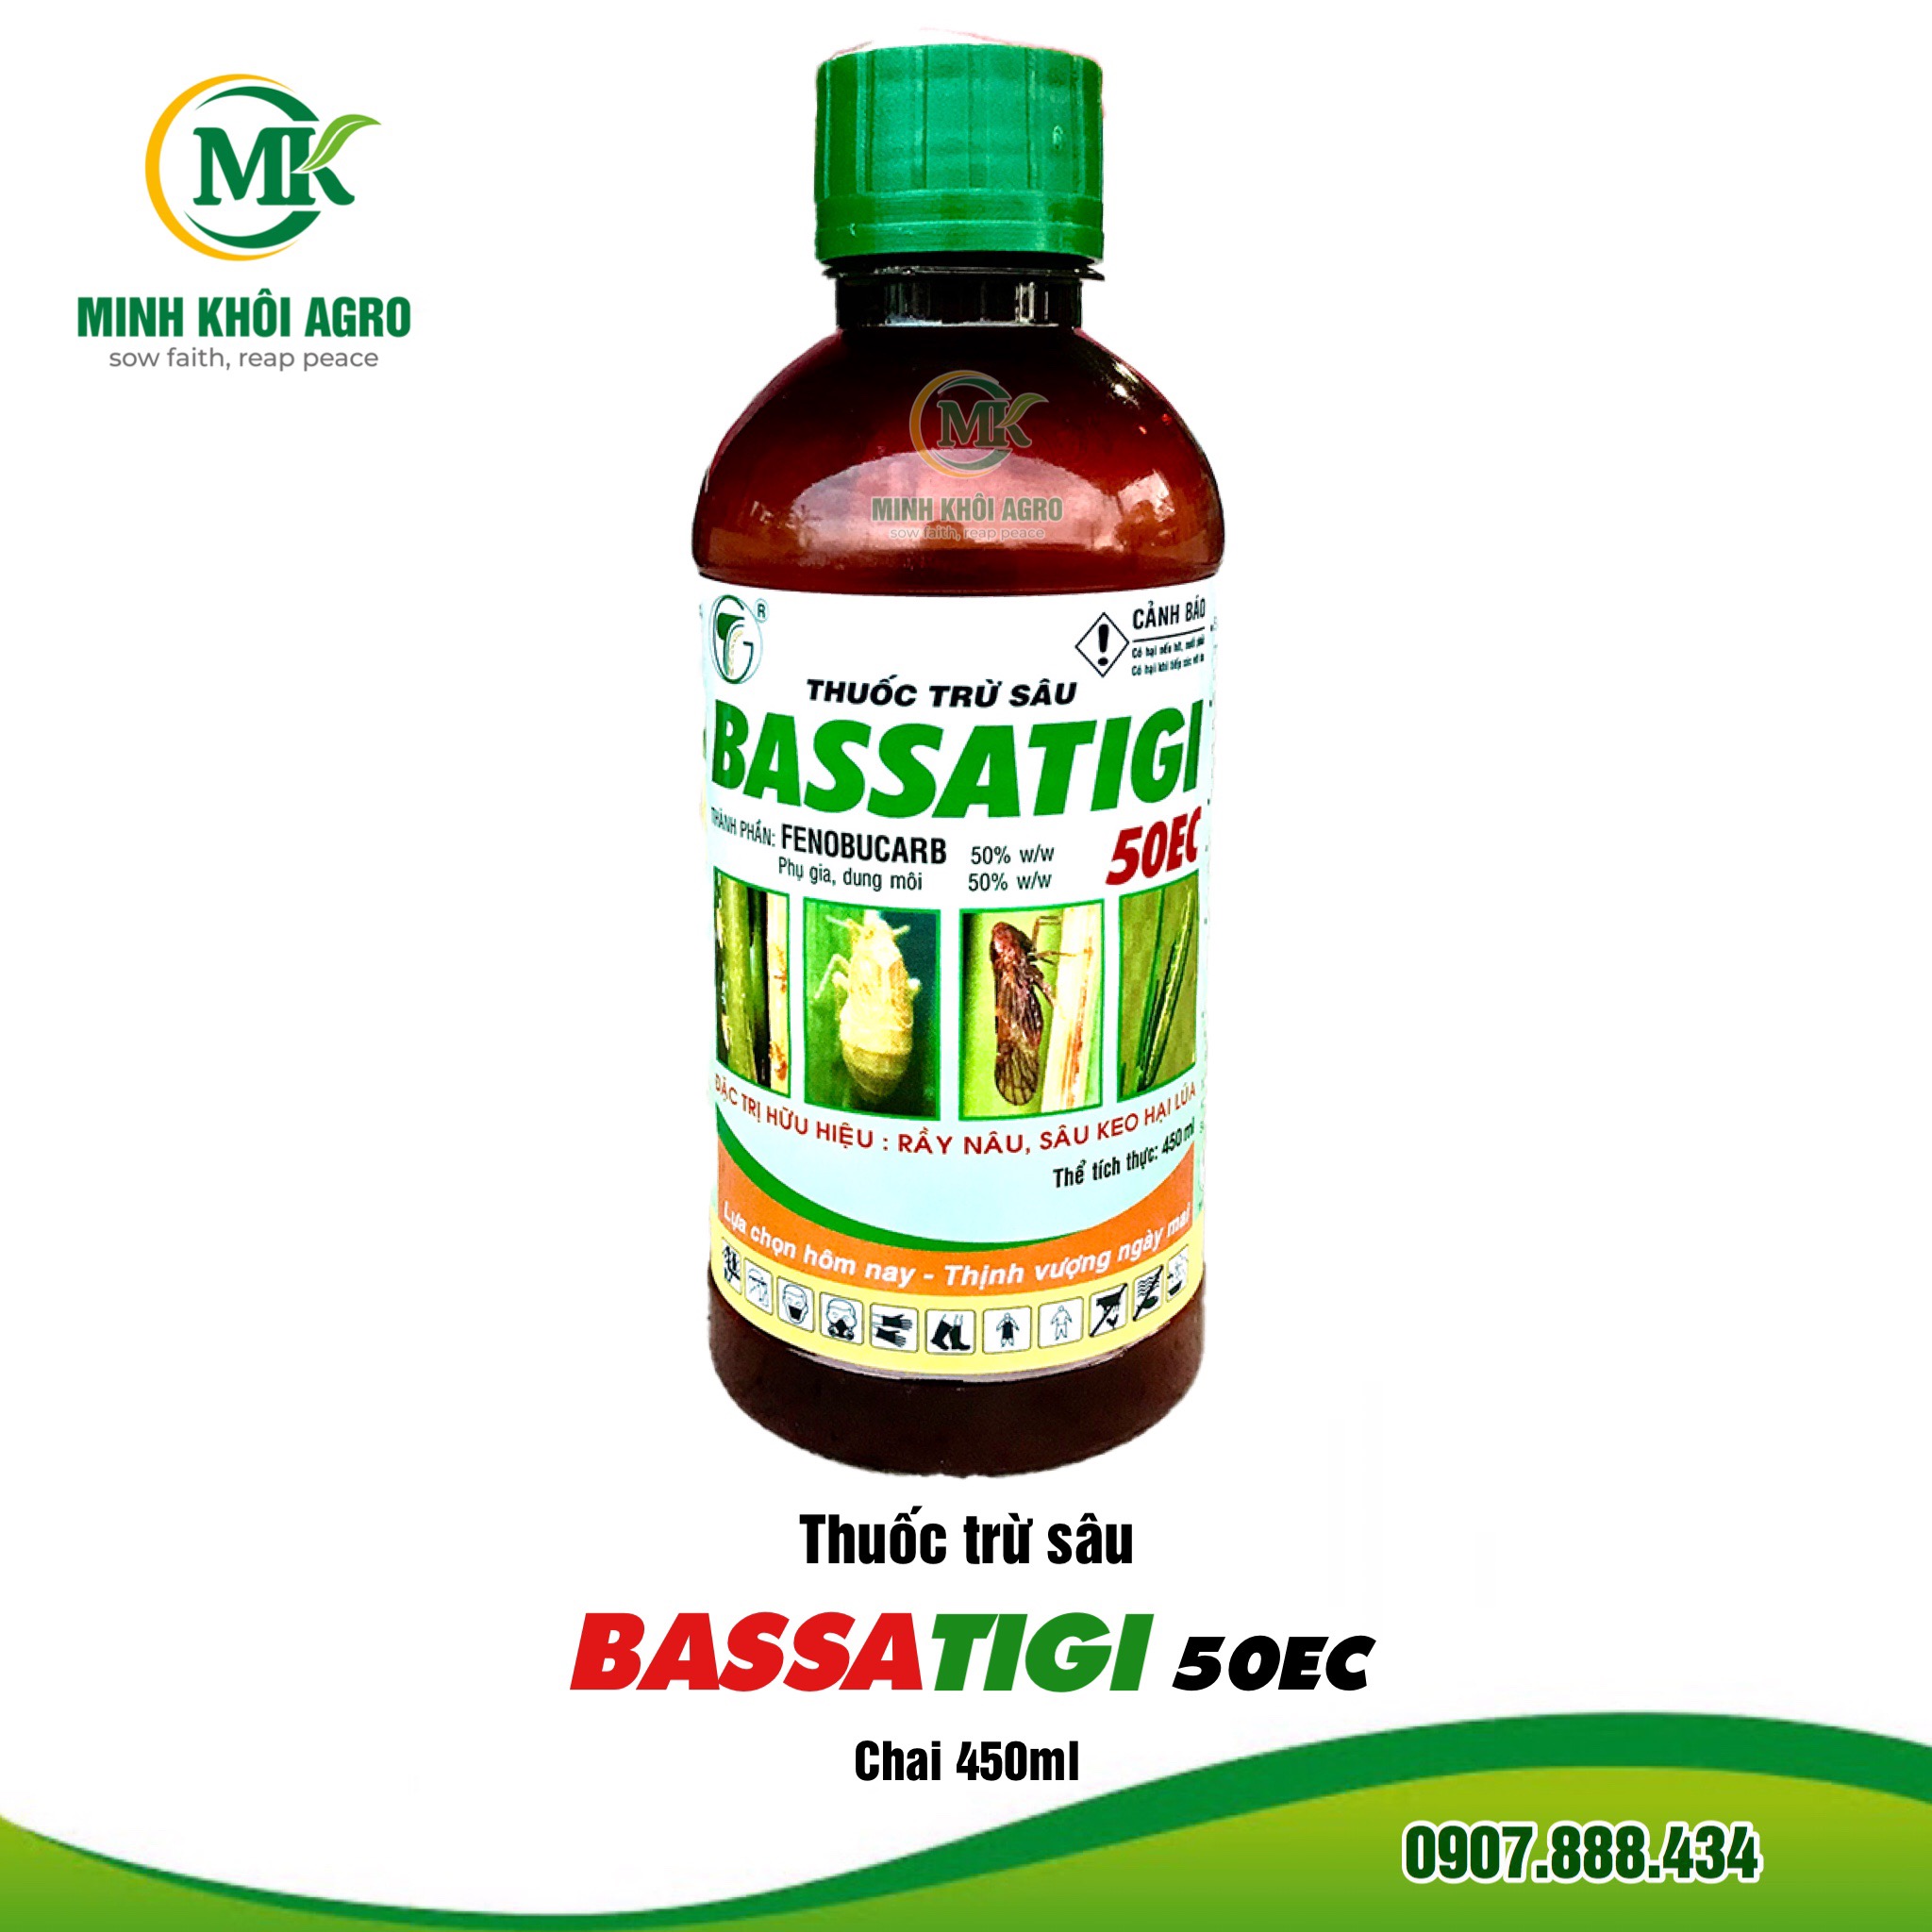 Thuốc trừ sâu BassaTigi 50EC - Chai 450ml